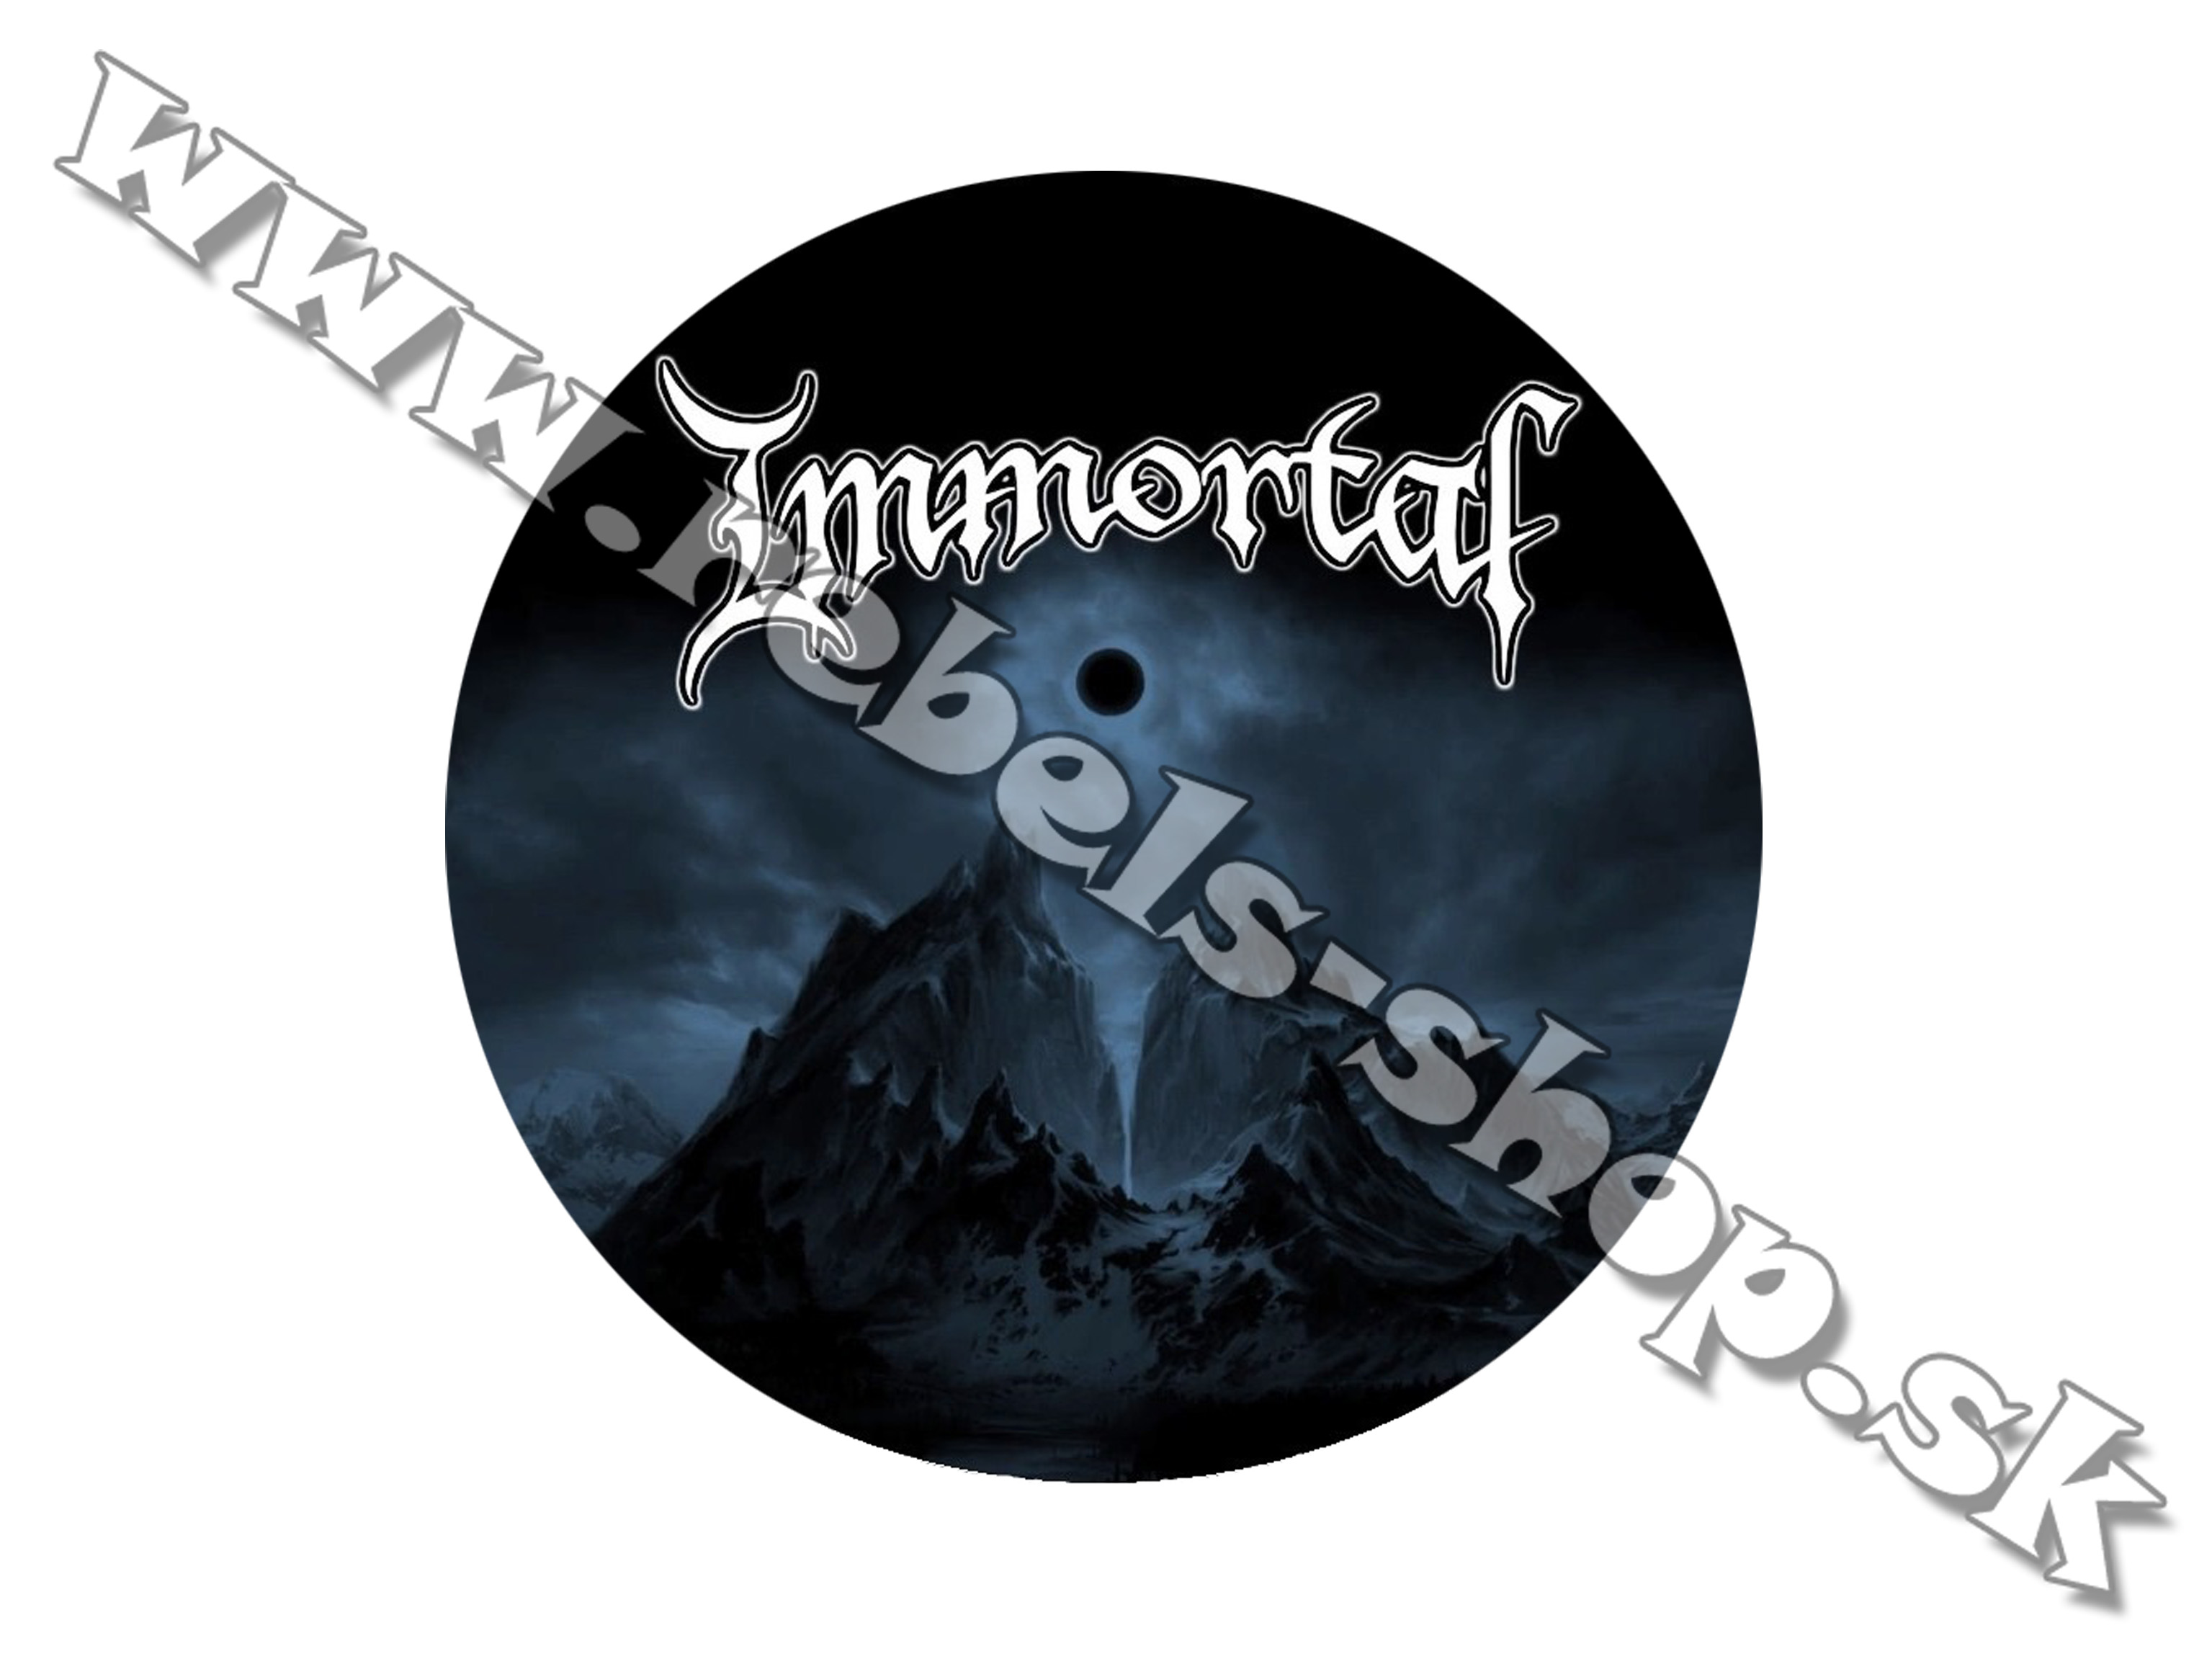 Odznak "Immortal"